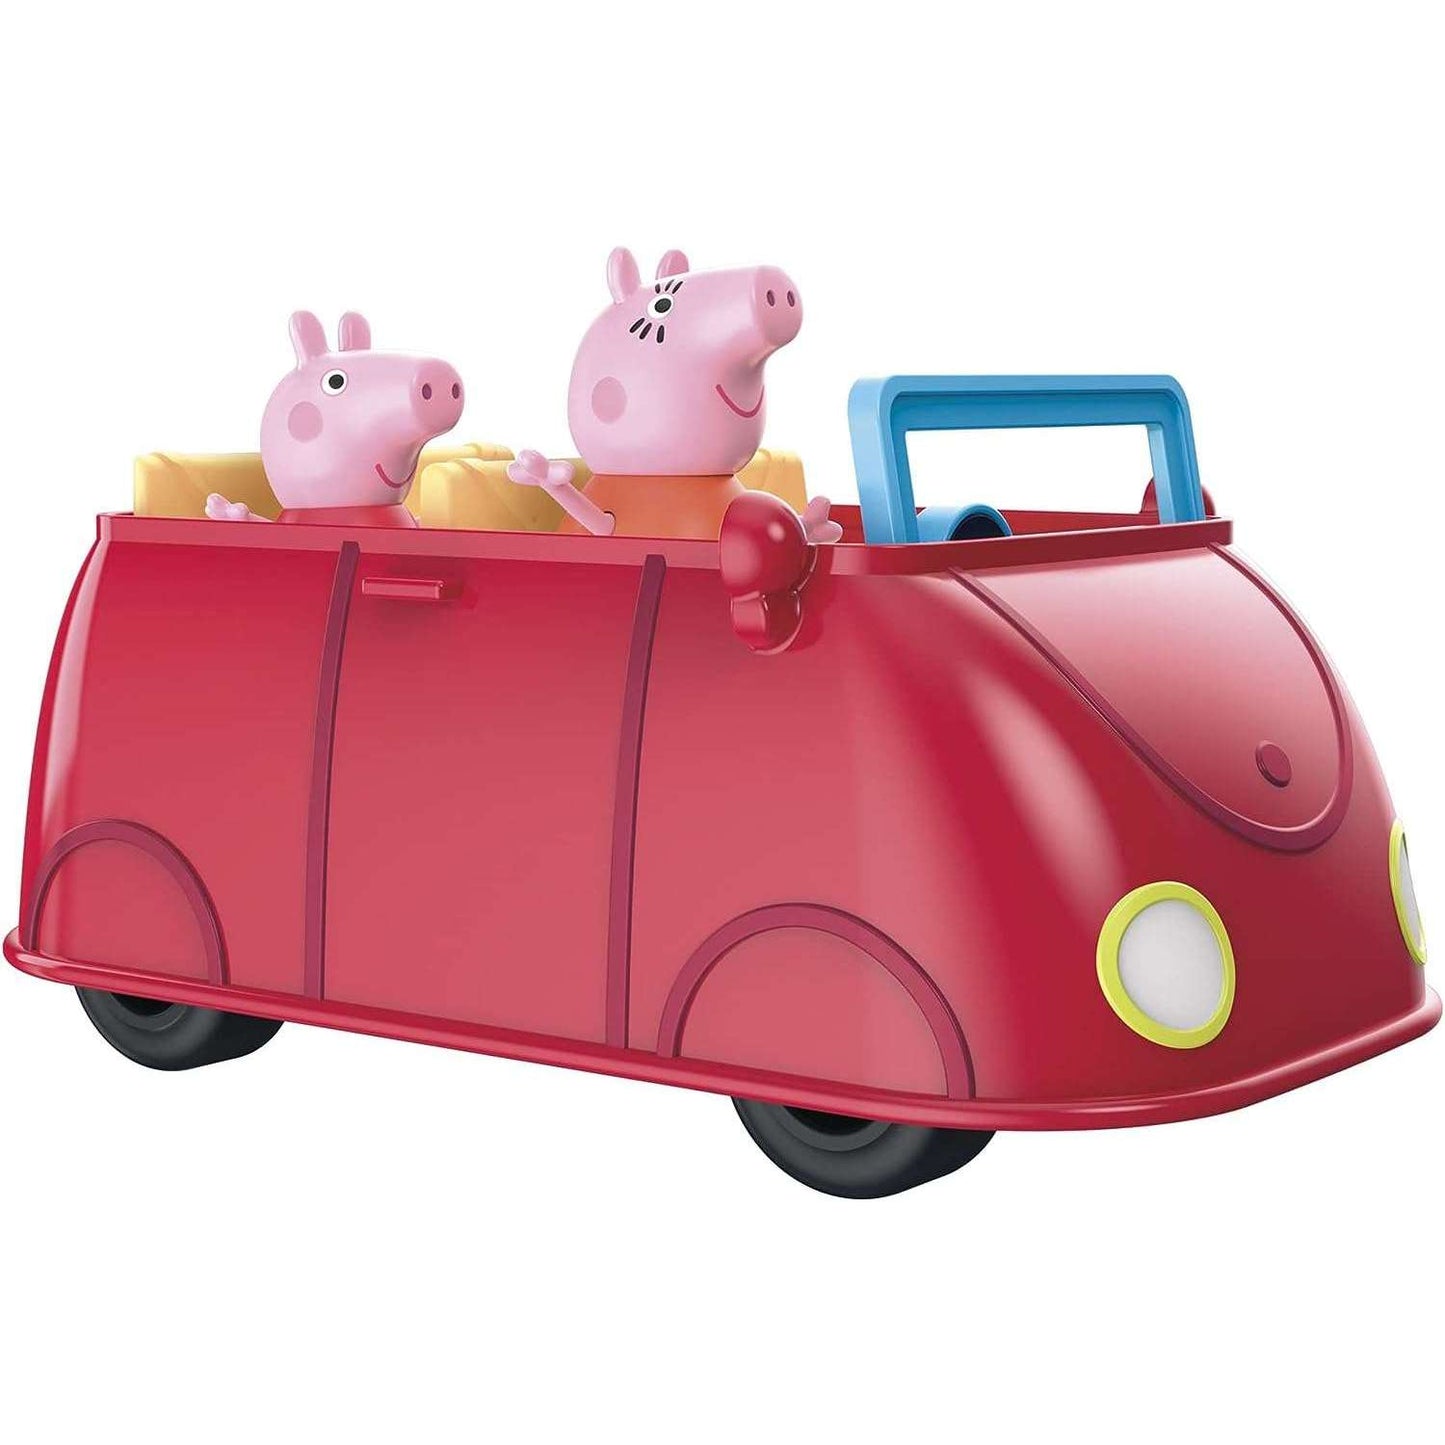 Toys N Tuck:Peppa Pig Peppa's Family Red Car,Peppa Pig